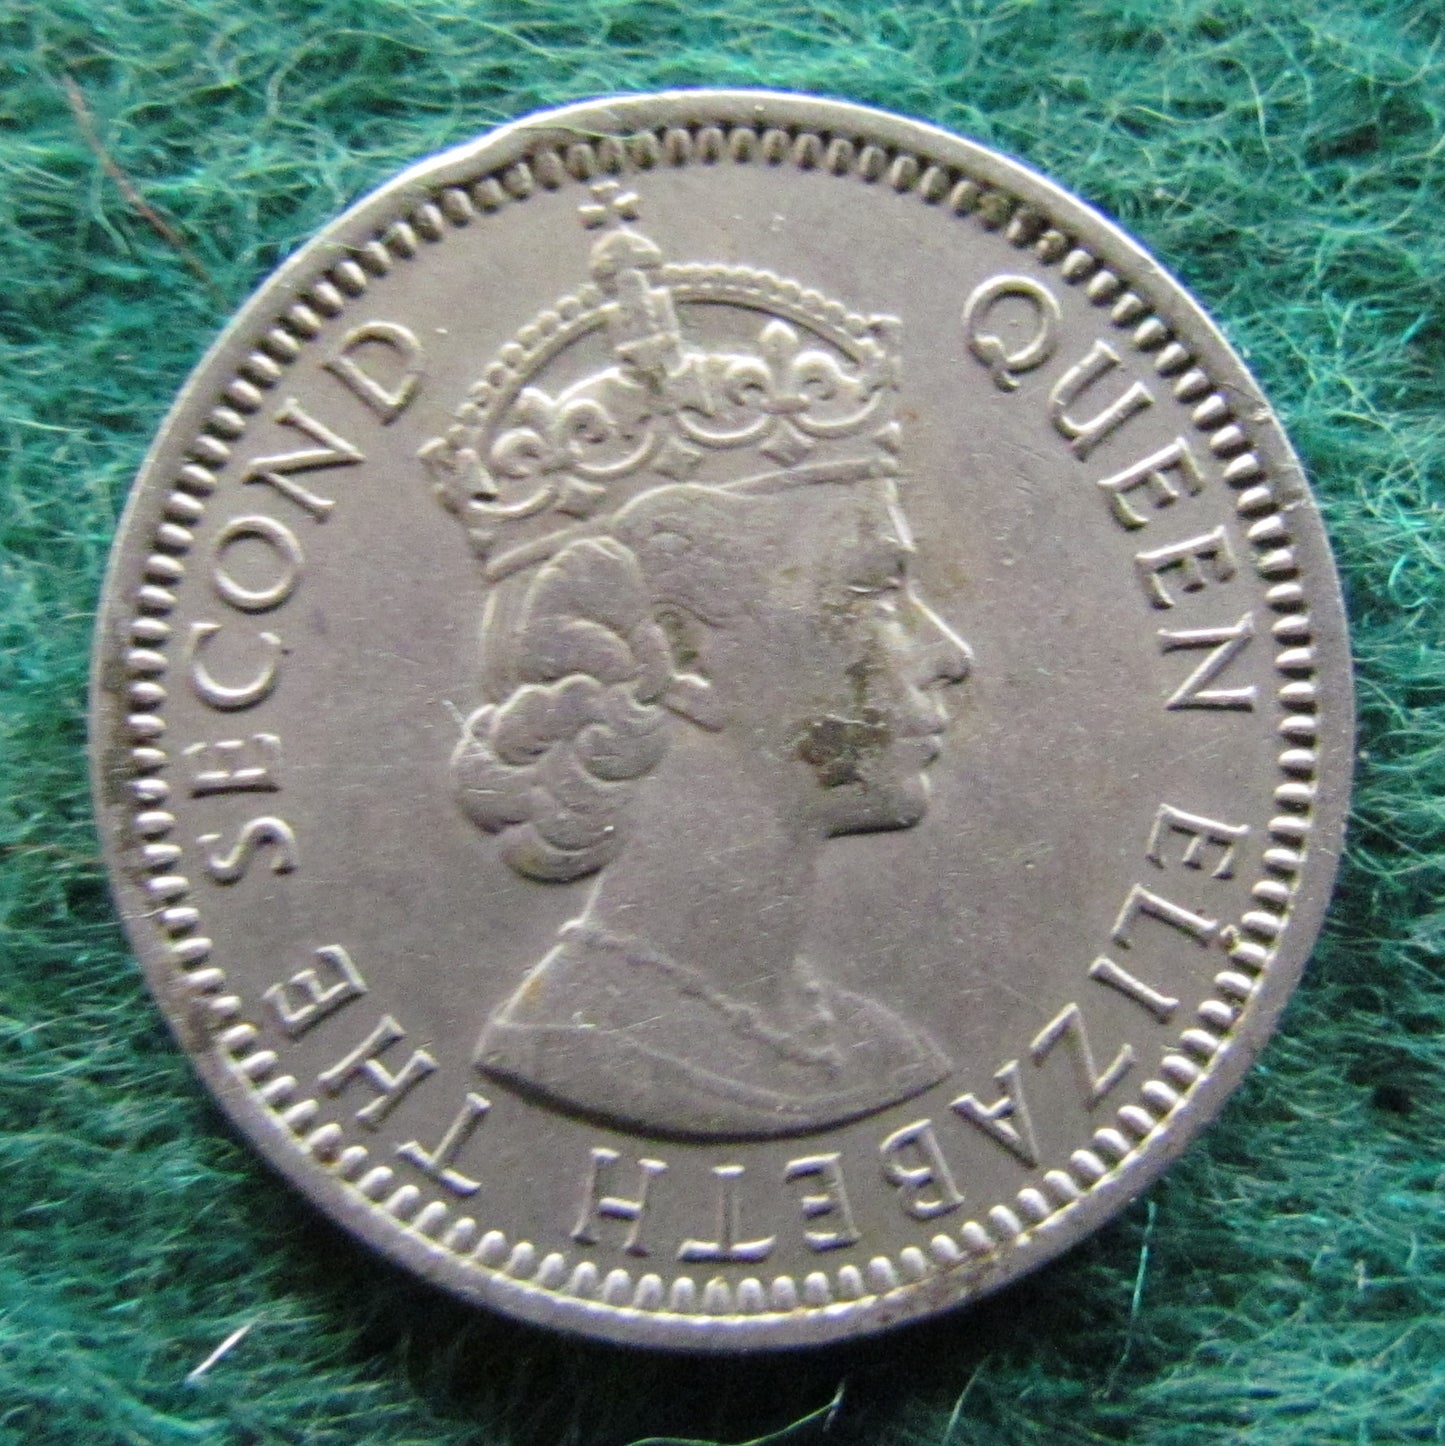 Malaya & British Borneo 1961 Ten Cent Queen Elizabeth II Coin